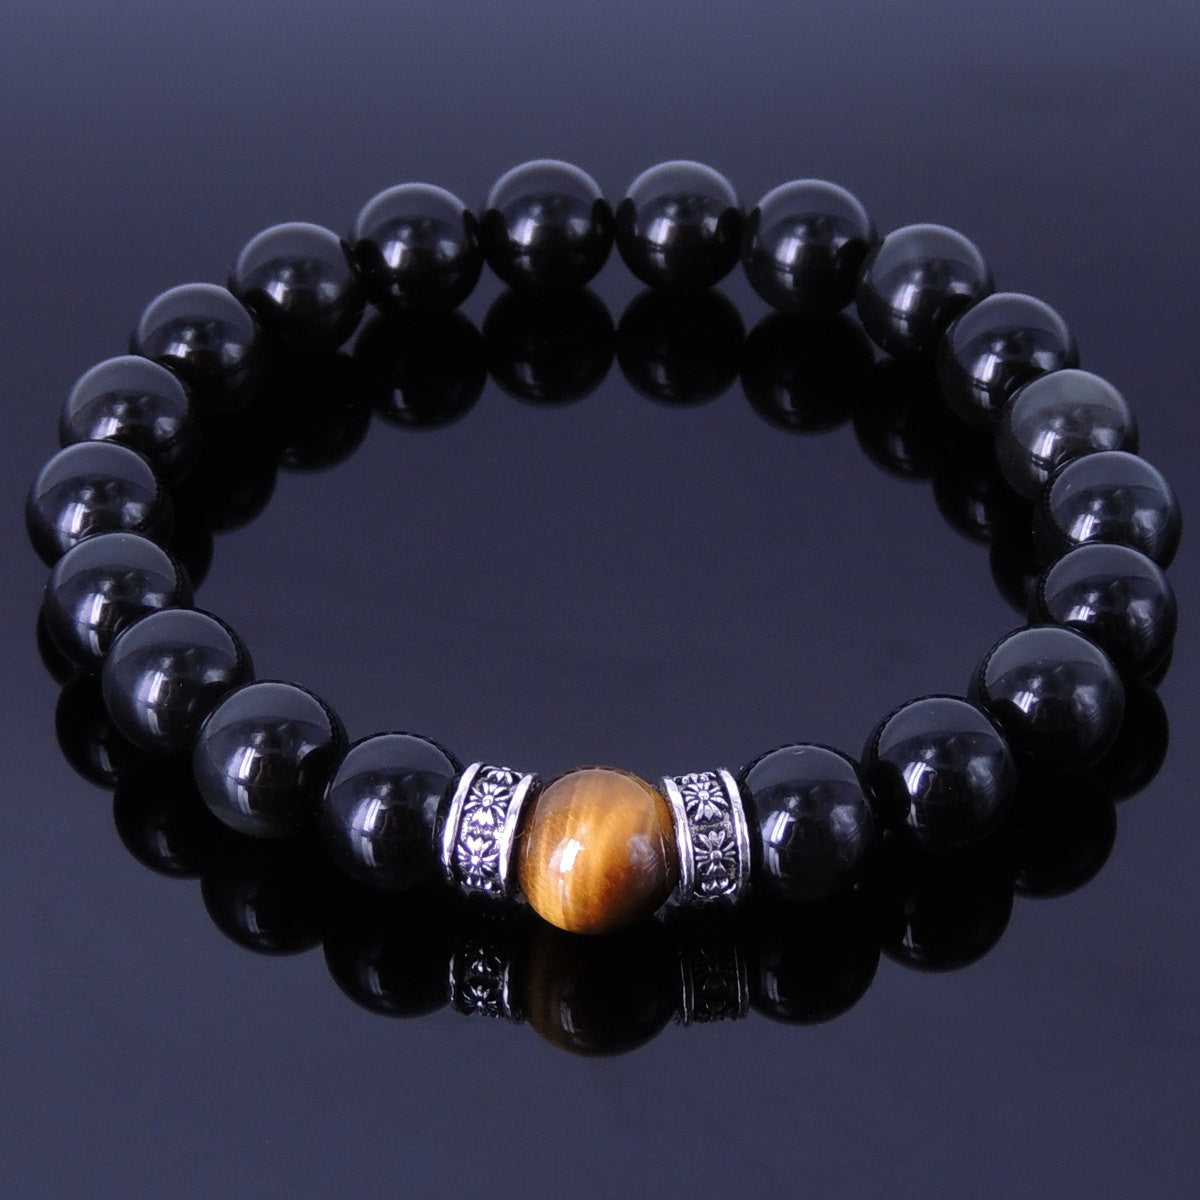 Black Obsidian & Brown Tiger Eye Healing Gemstone Bracelet with S925 Sterling Silver Cross Spacers - Handmade by Gem & Silver BR163